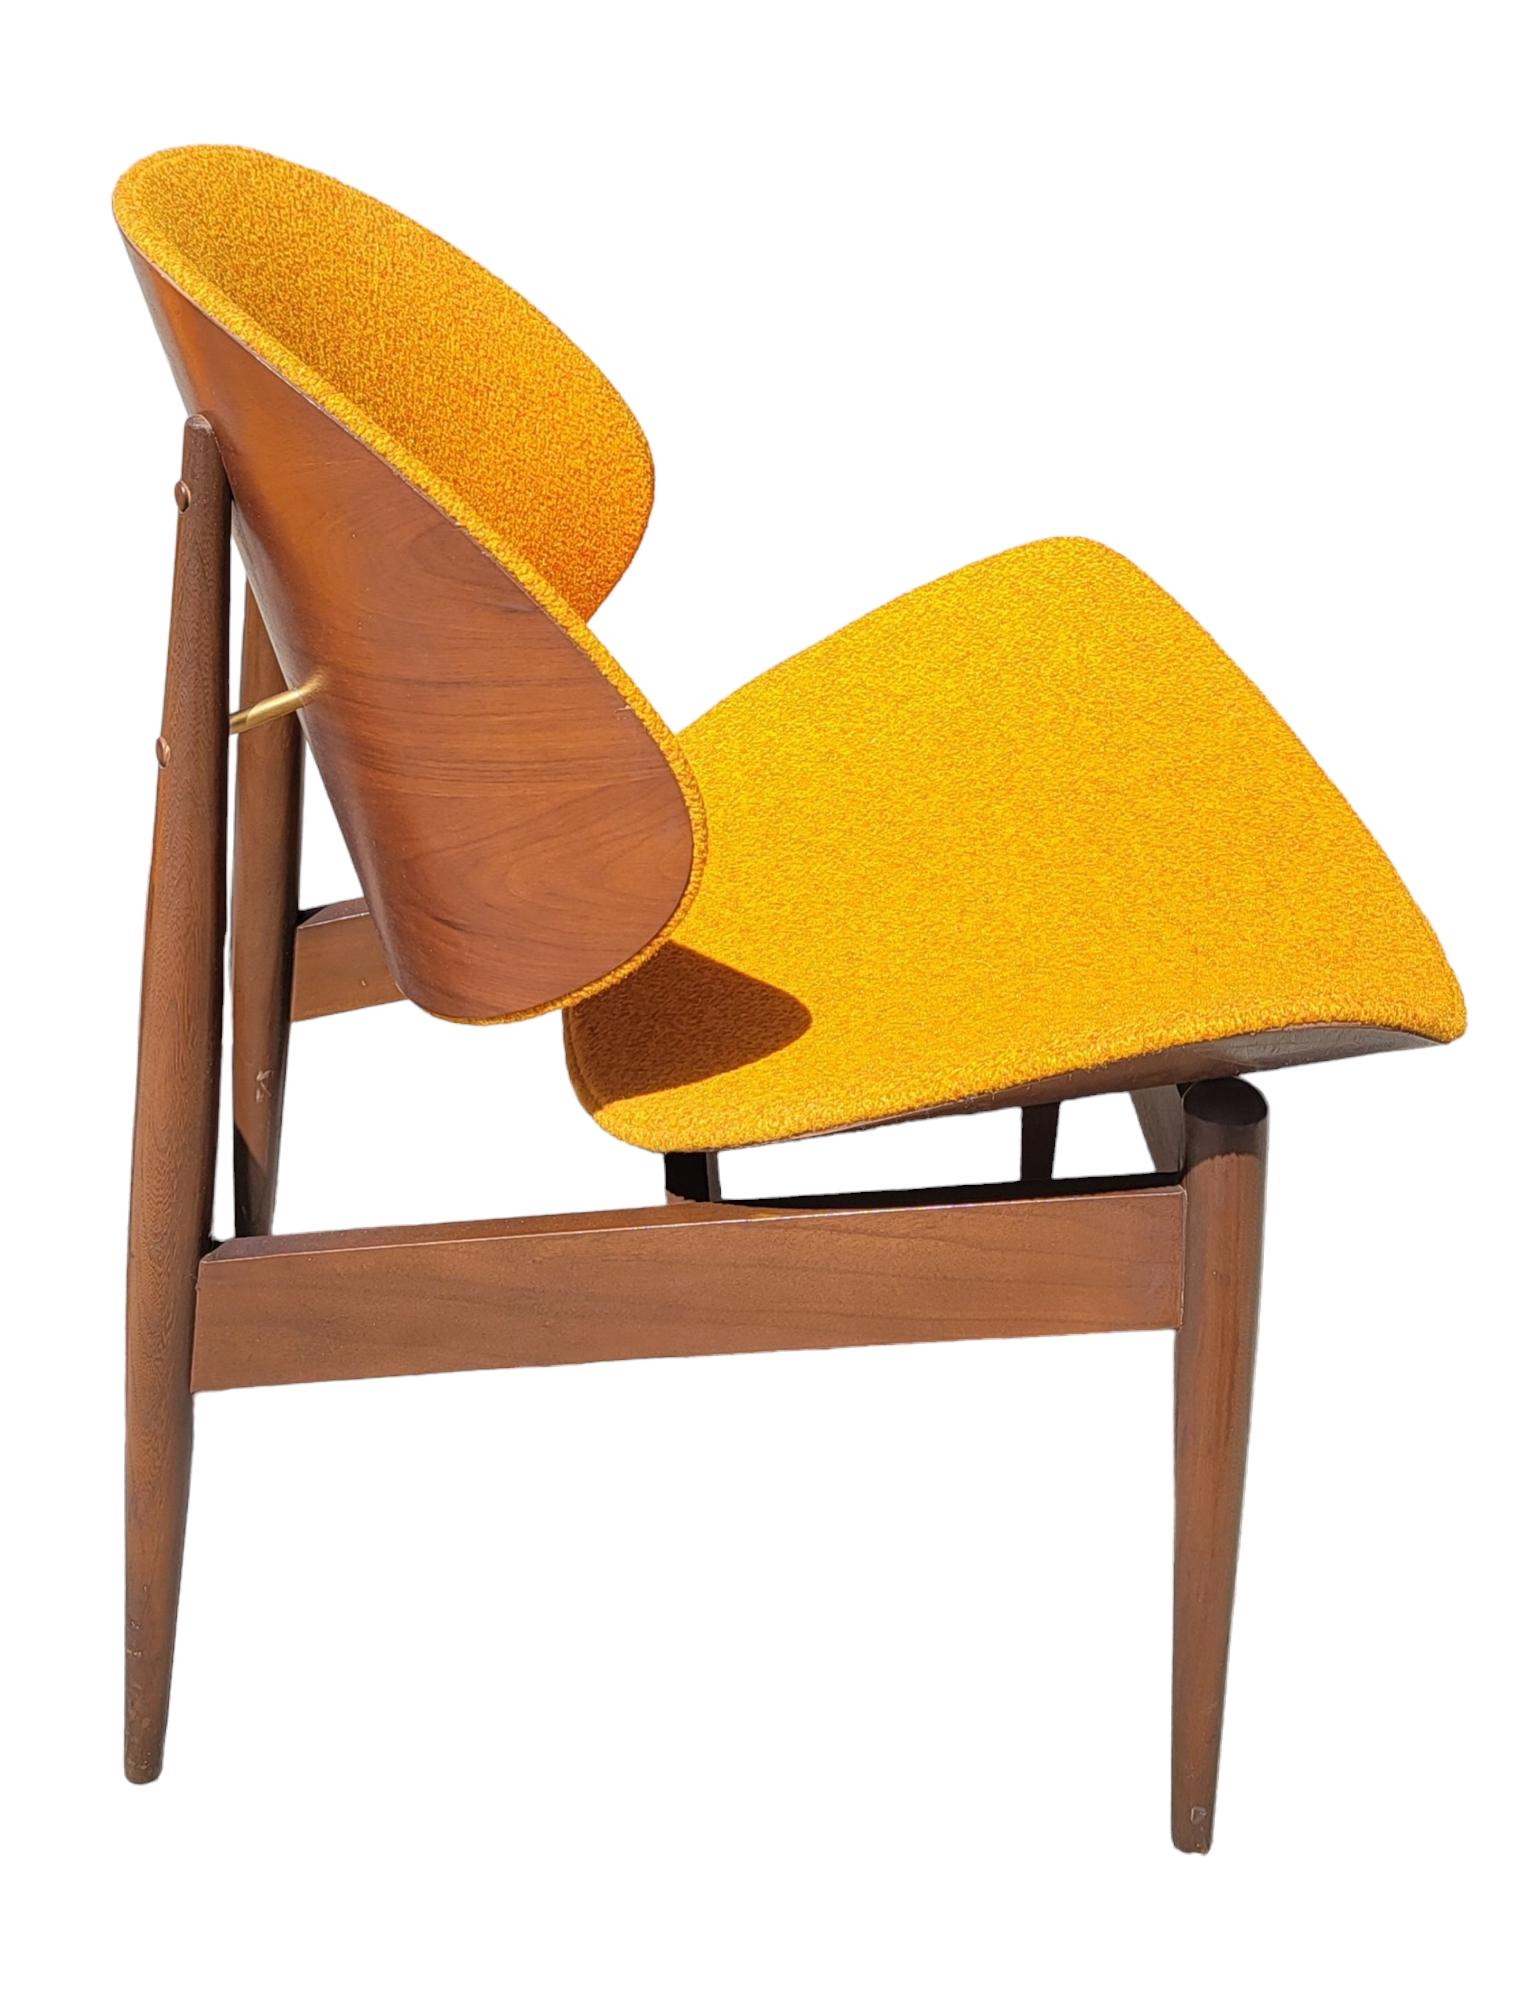 Wood Vintage Mid Century Seymour James Weiner Kodawood Oyster Chair